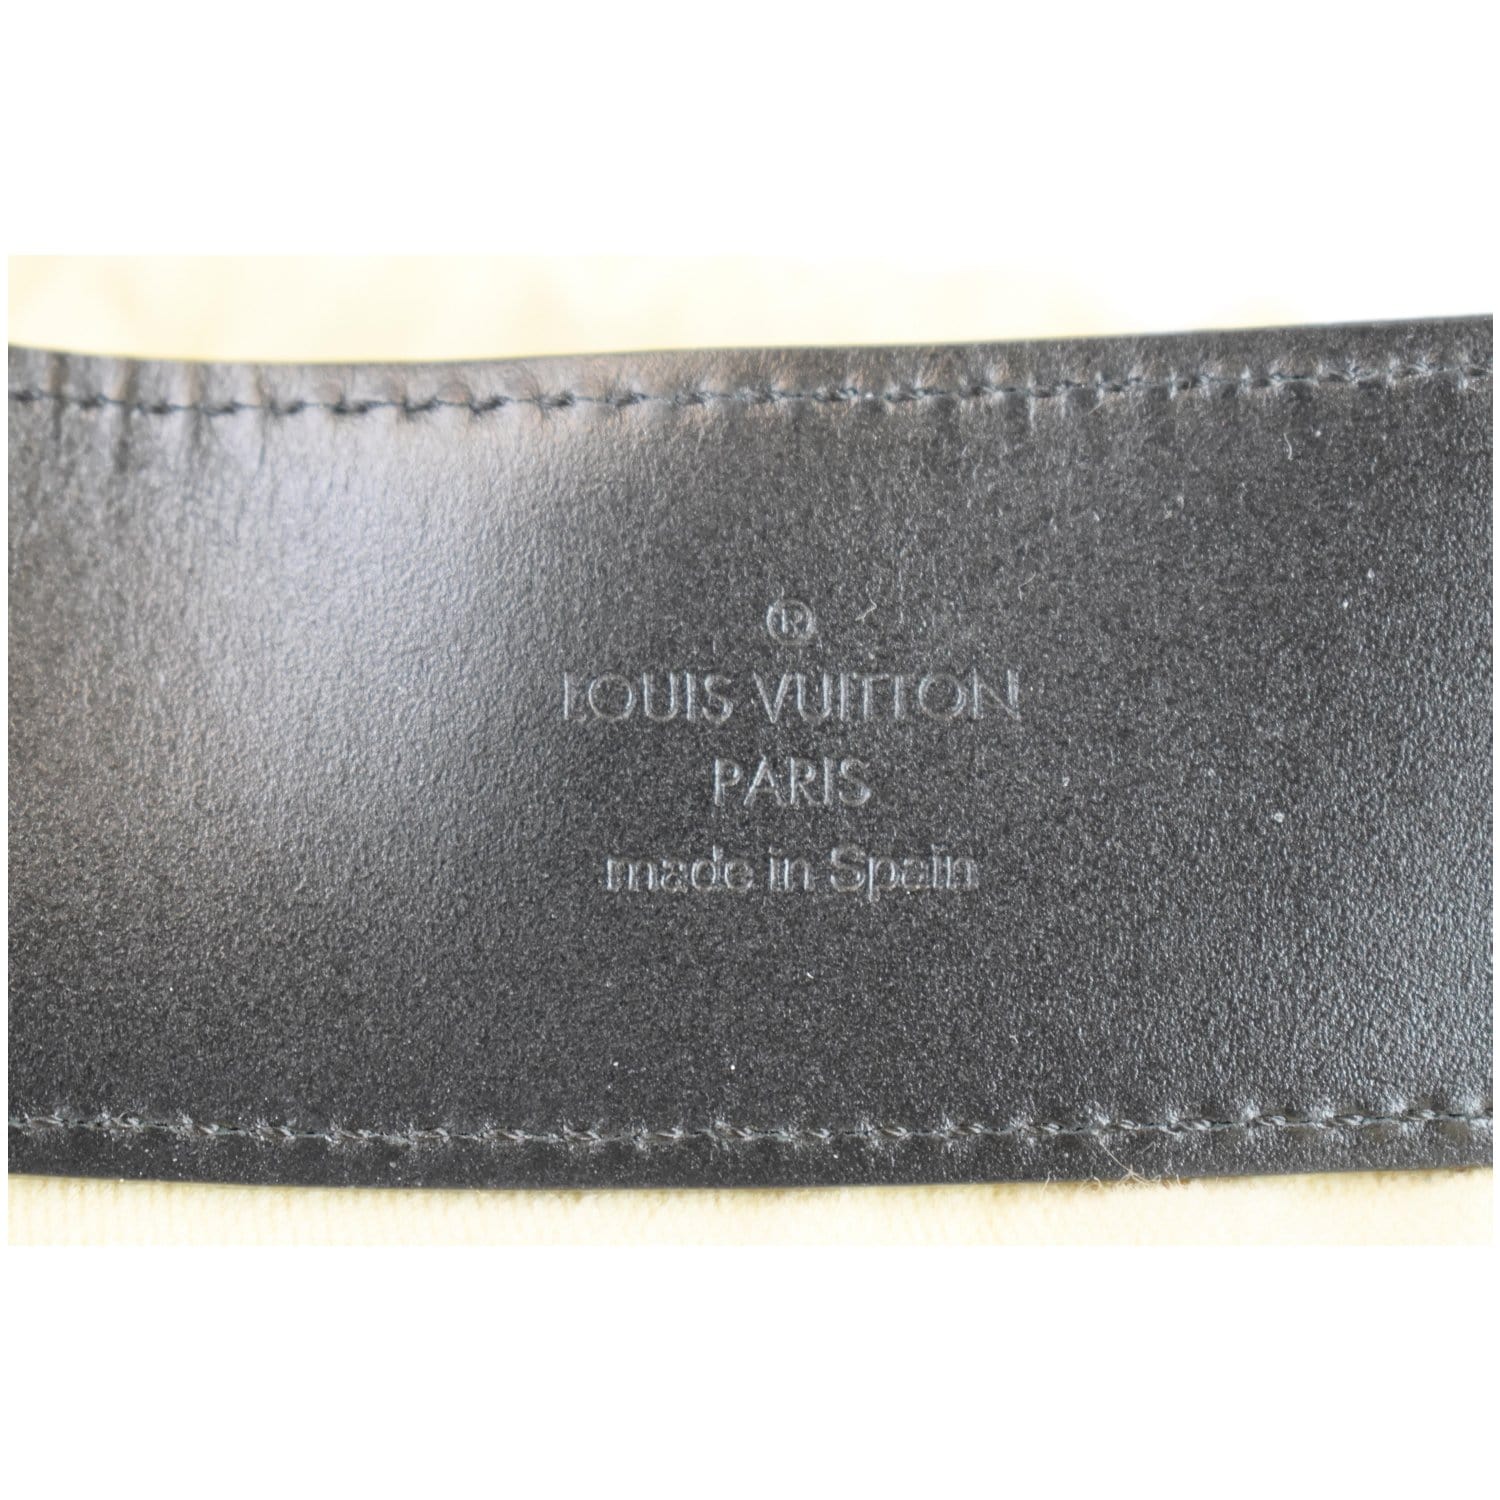 LV initial 20mm belt - The Designer Club